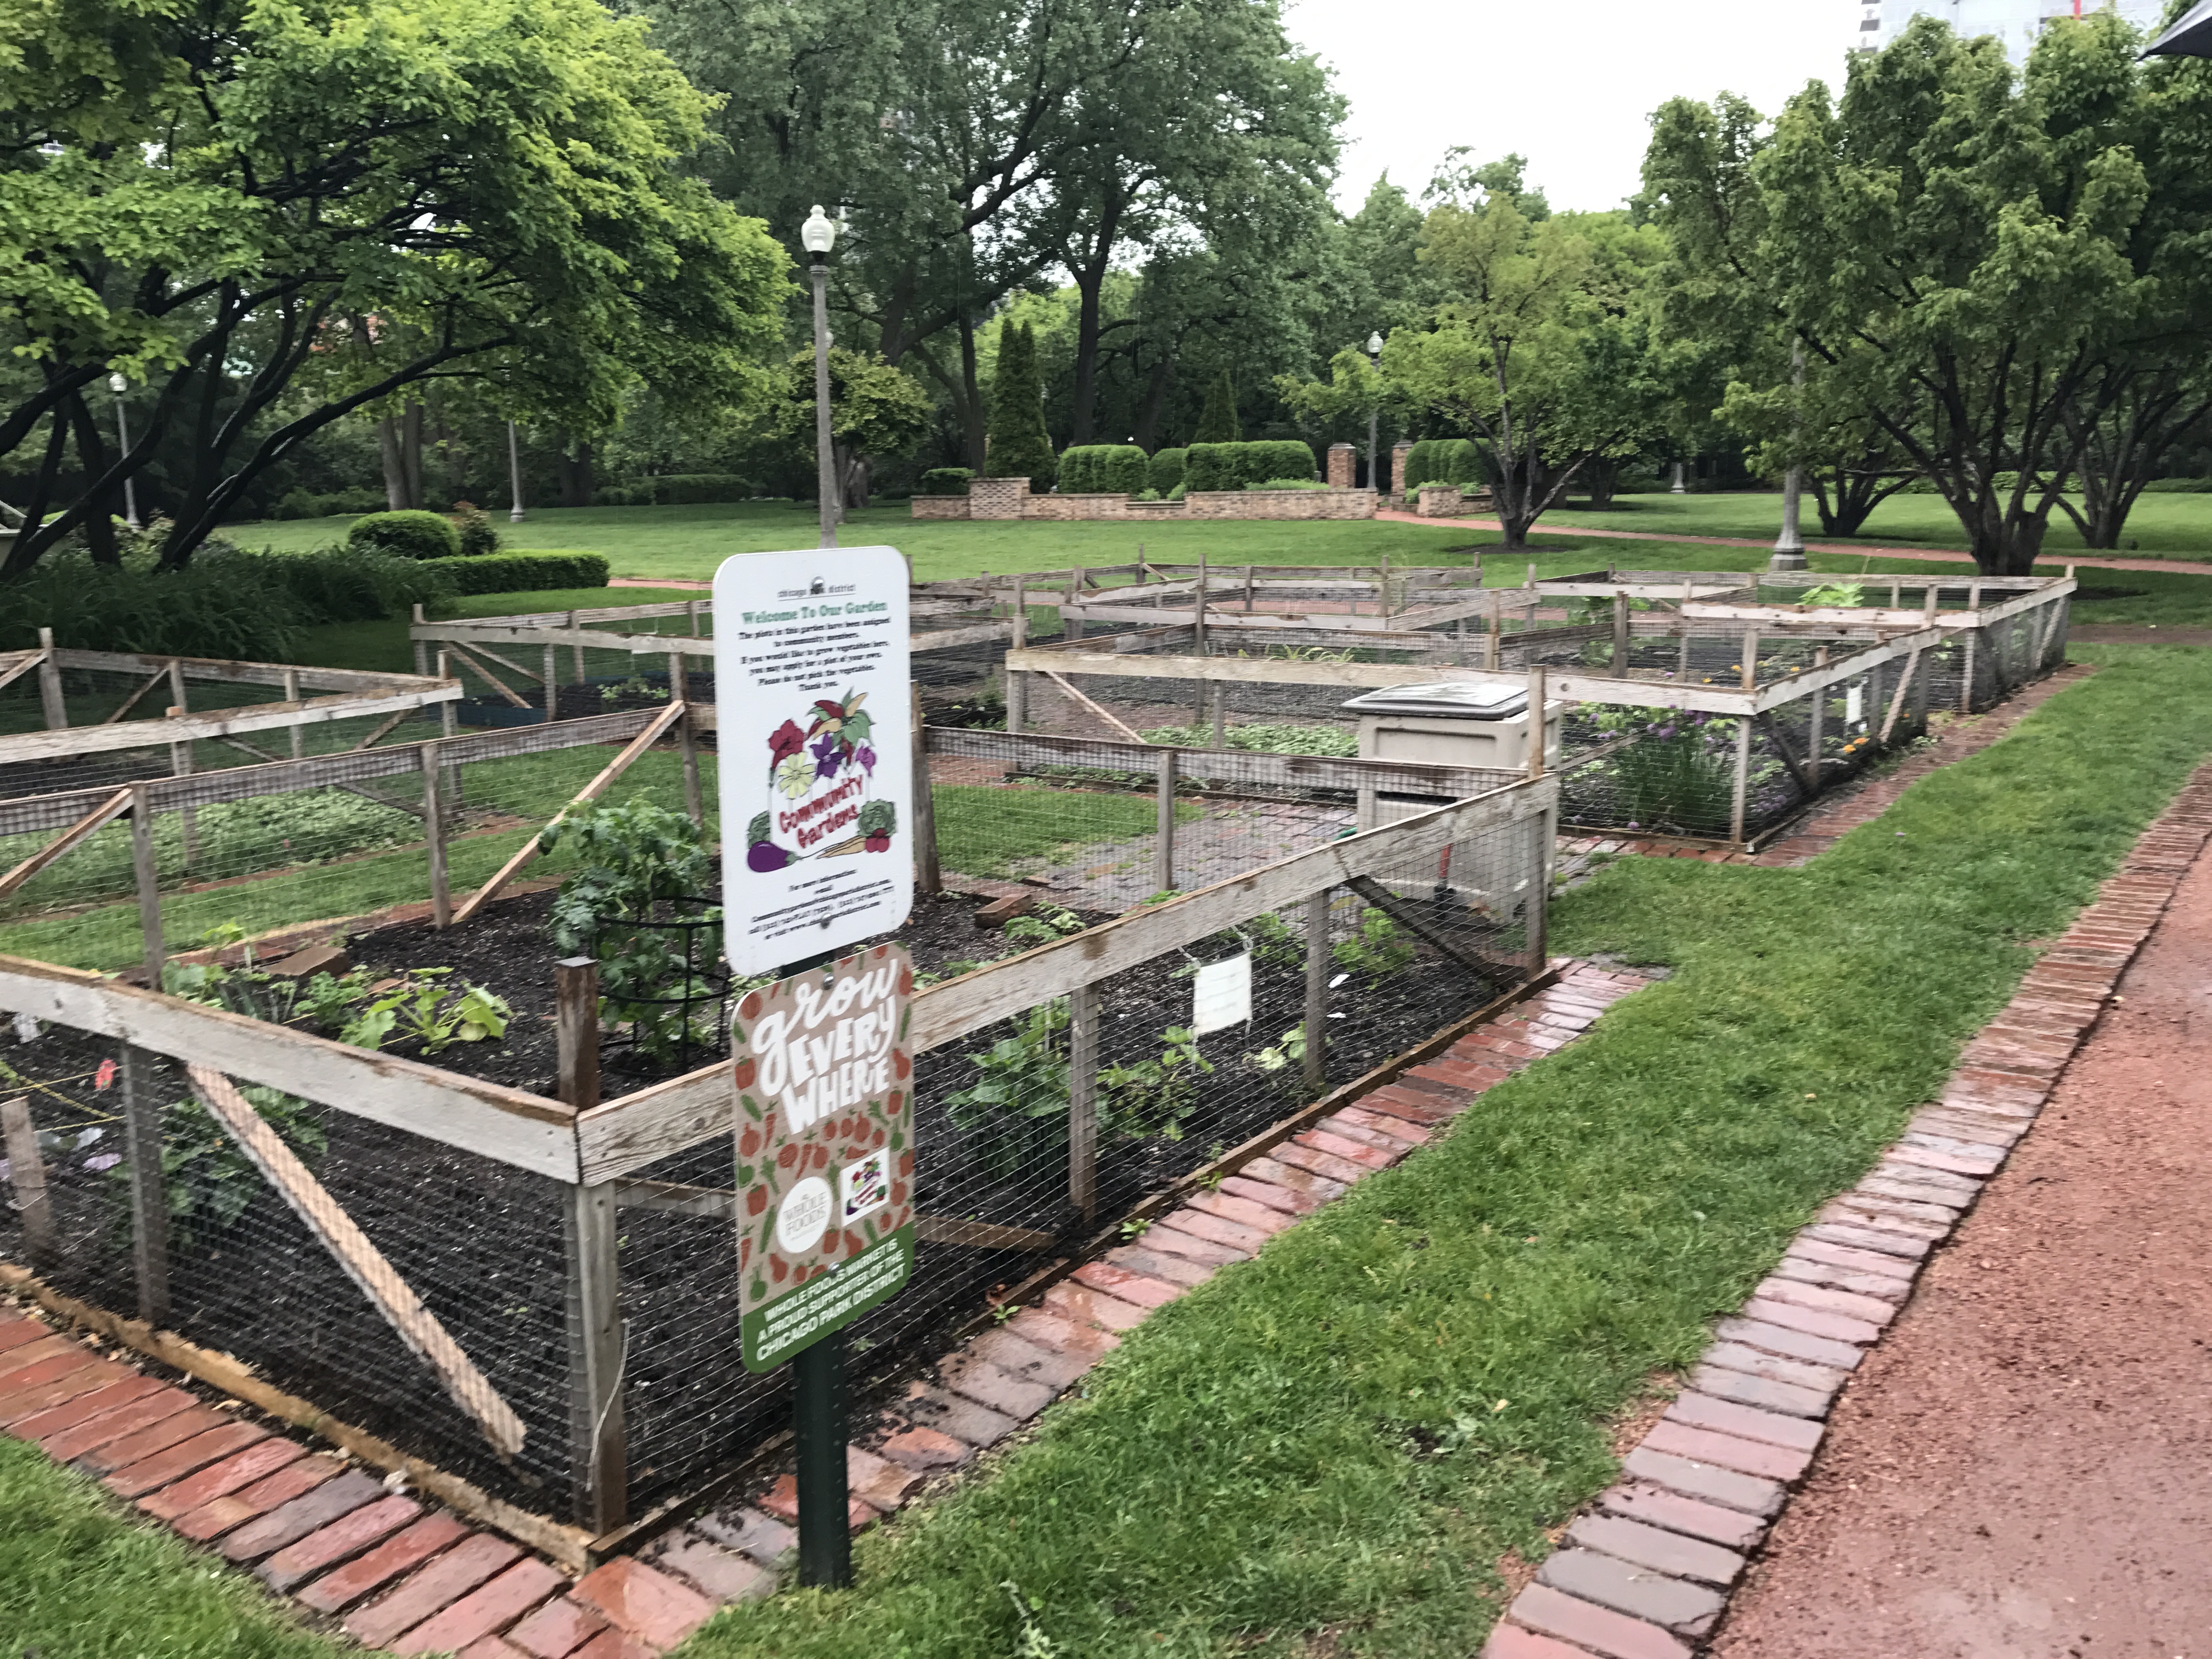 Urban gardening at a public park in Chicago